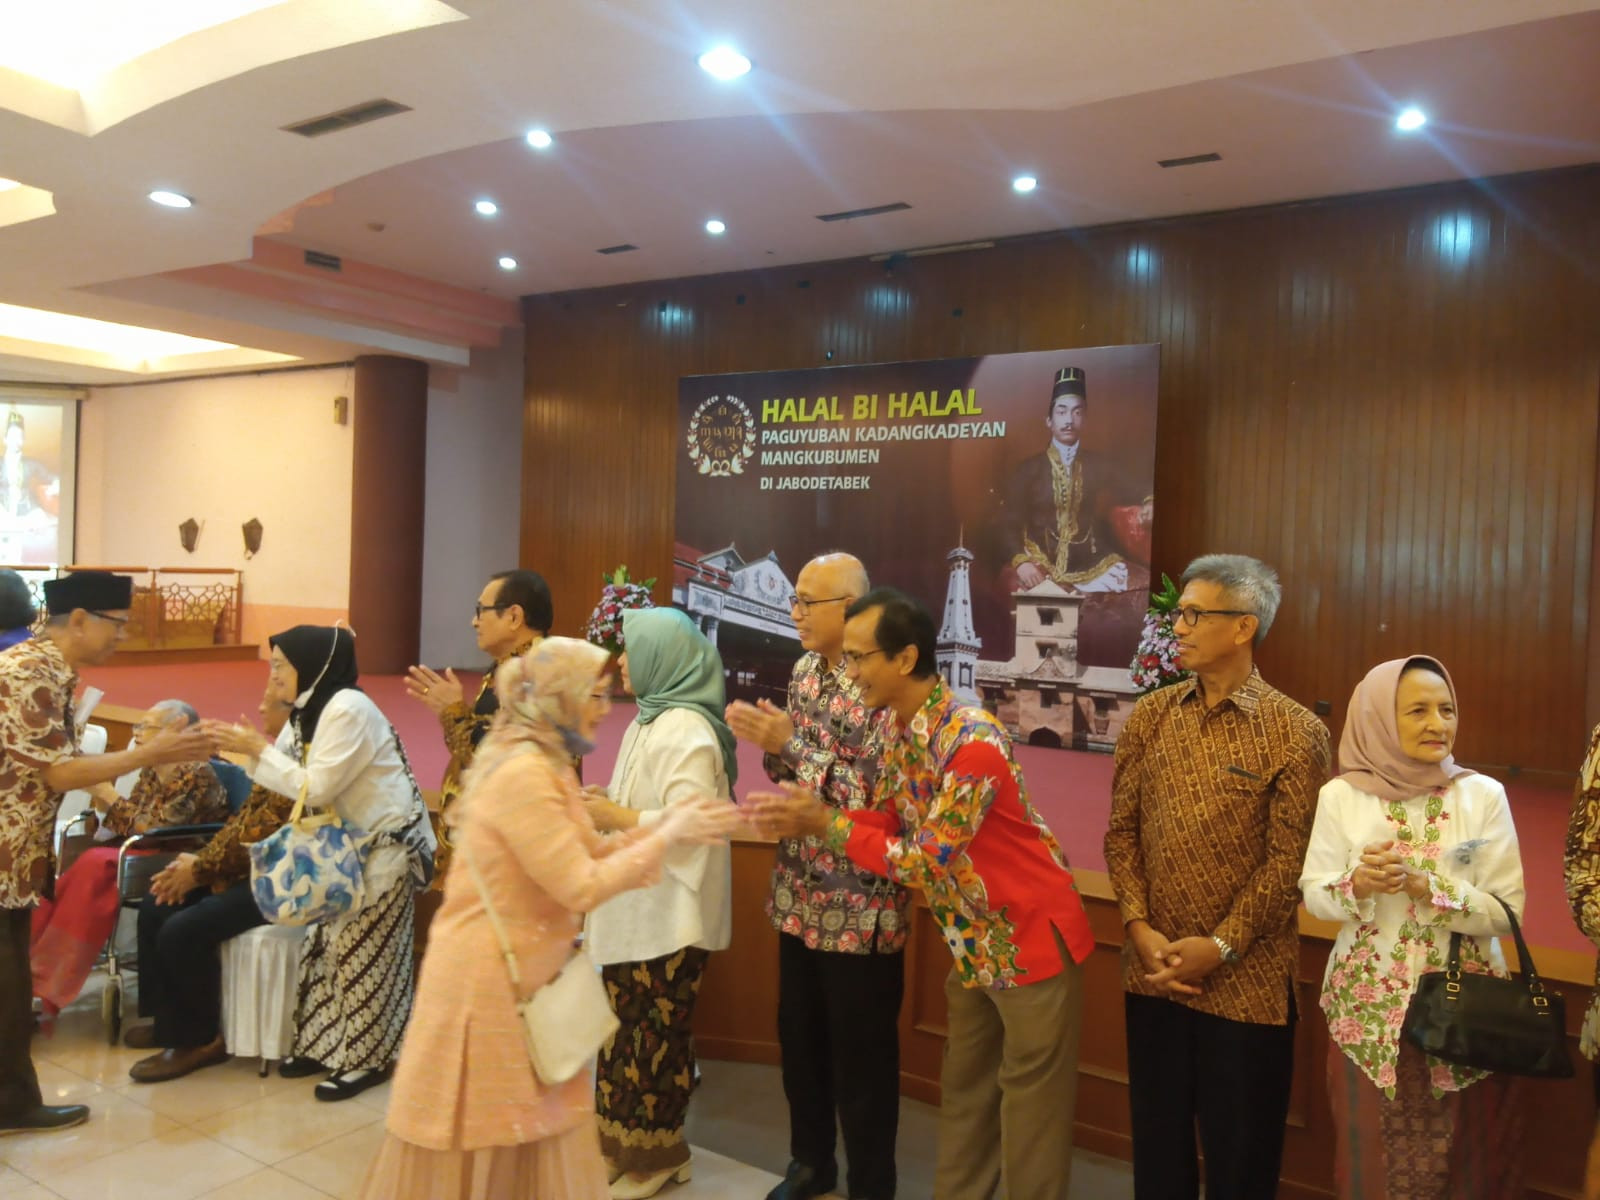 Keluarga Besar KGPA Mangkubumi di Jabodetabek Gelar Halal bi Halal